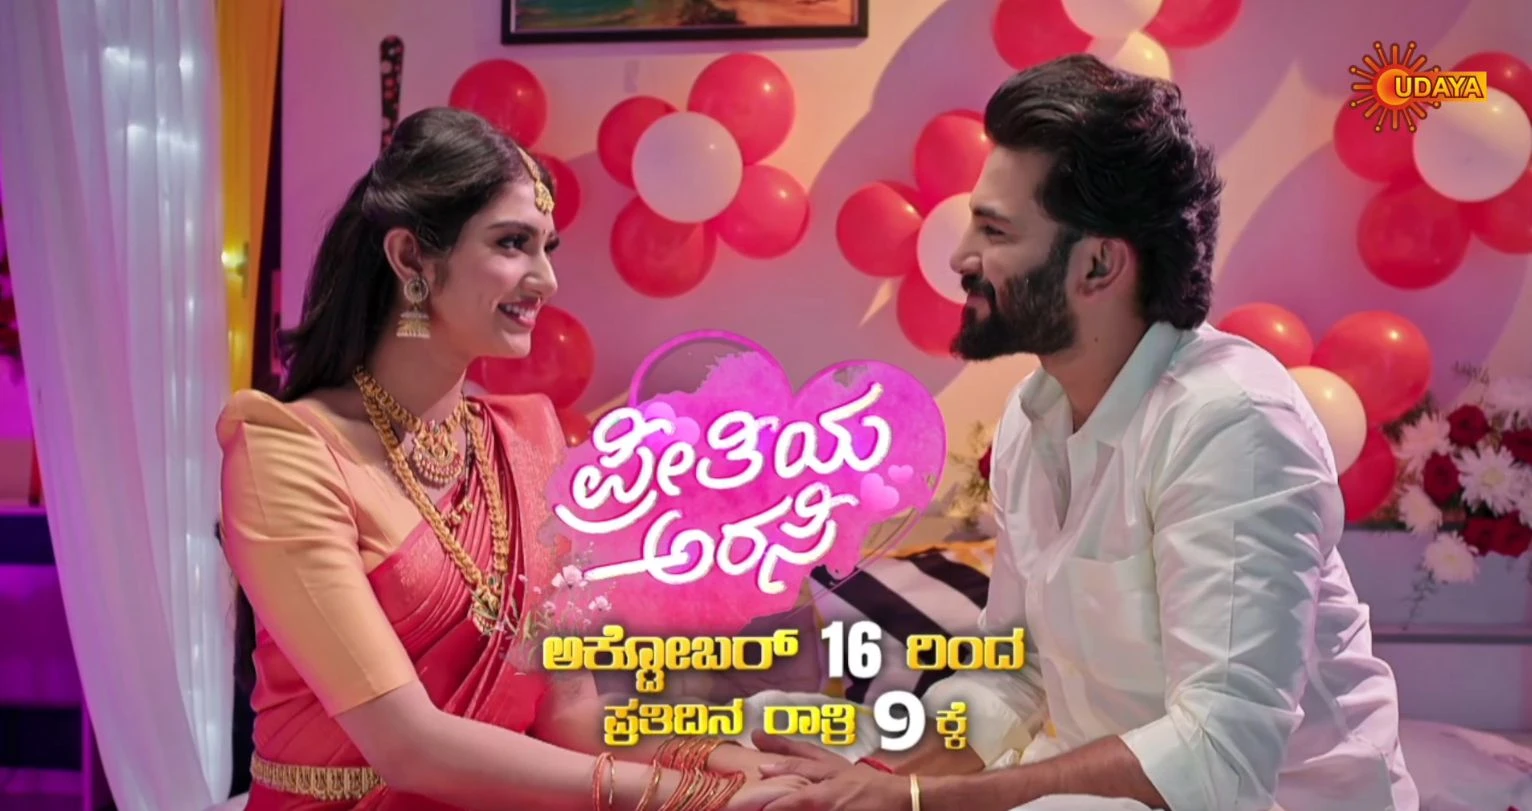 Nayanatara Udaya TV Kannada Serial Launching on 8th February at 9:30 P.M 6